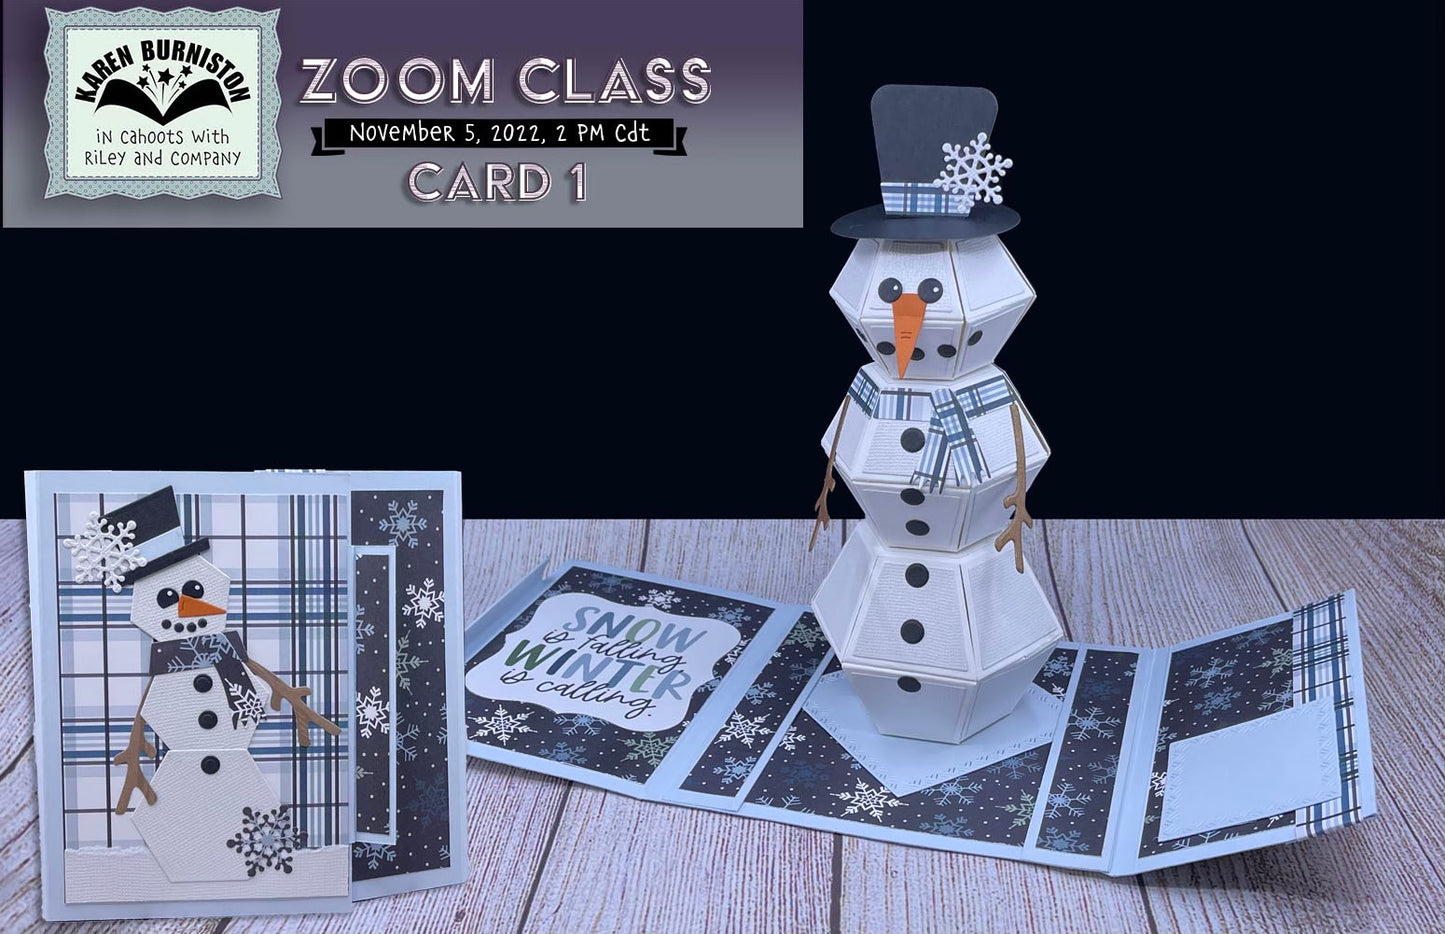 Karen Burniston Nov ‘22 Snowball Zoom Class